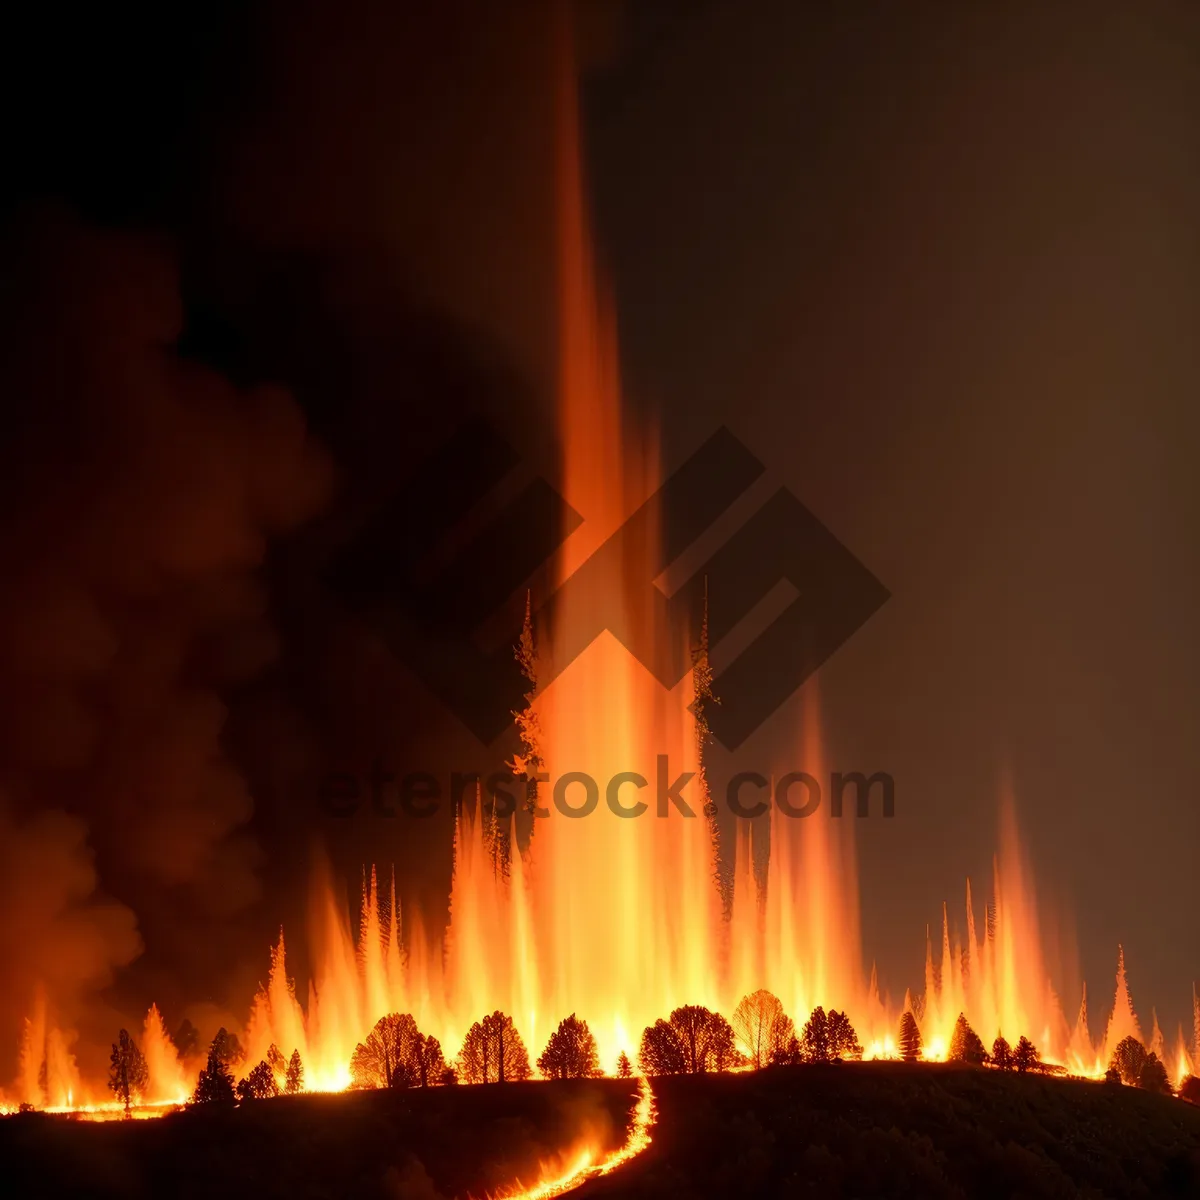 Picture of Fiery Blaze: Burning Flames Illuminate Warm Fireplace